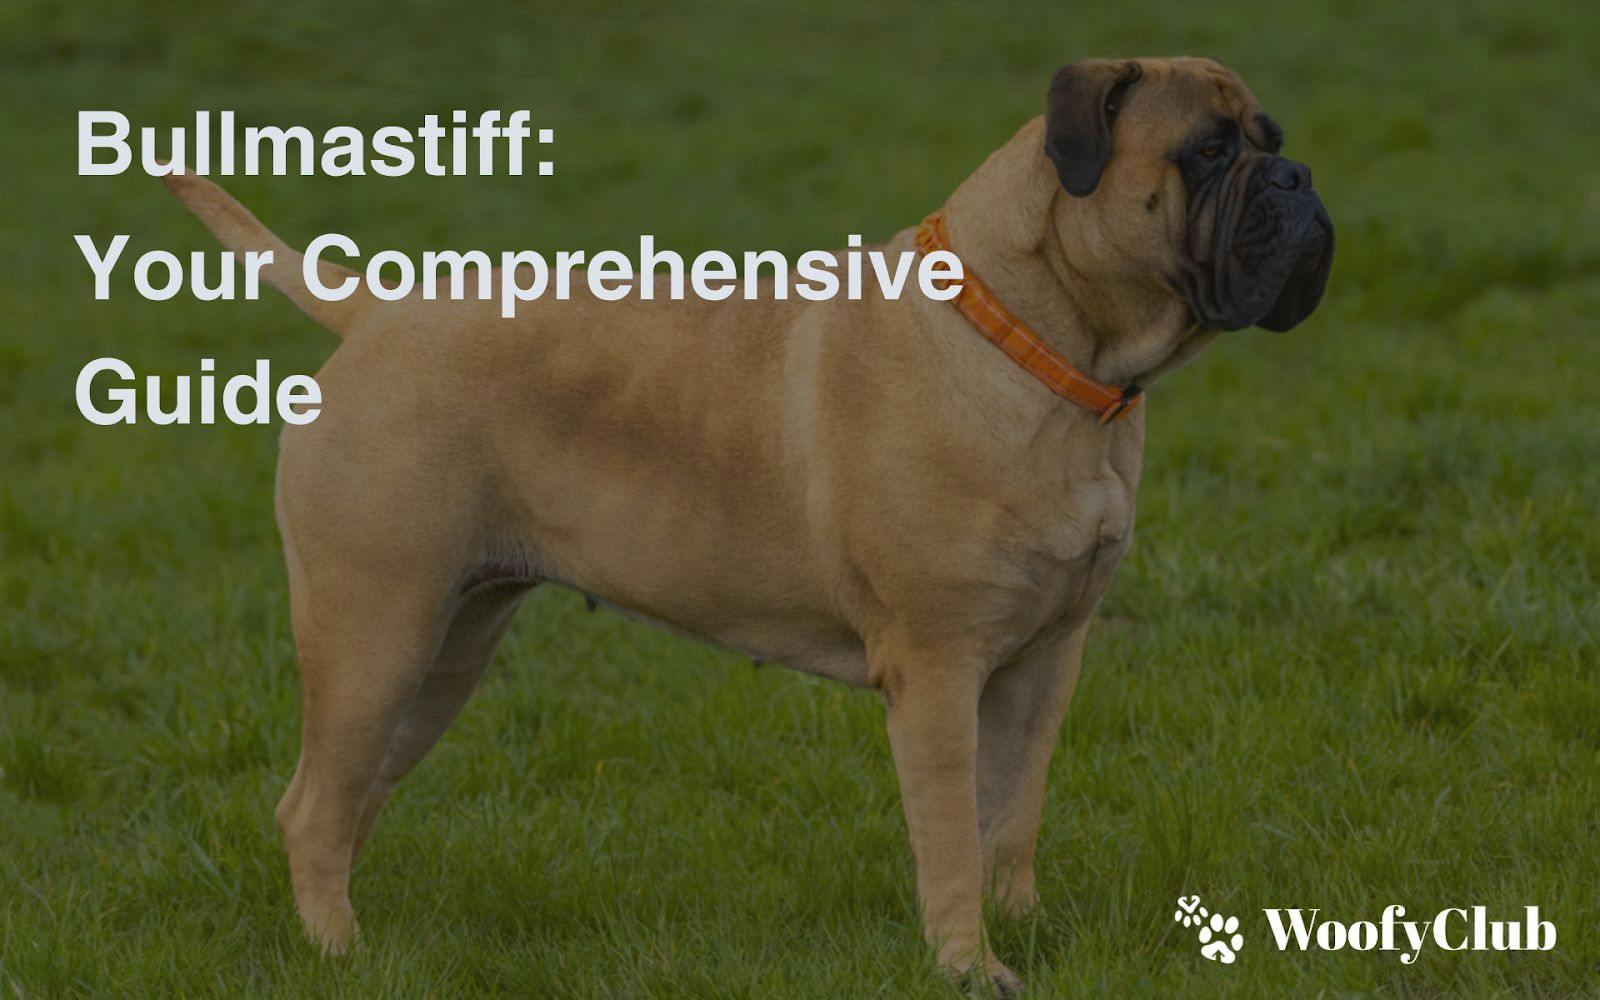 Bullmastiff: Your Comprehensive Guide